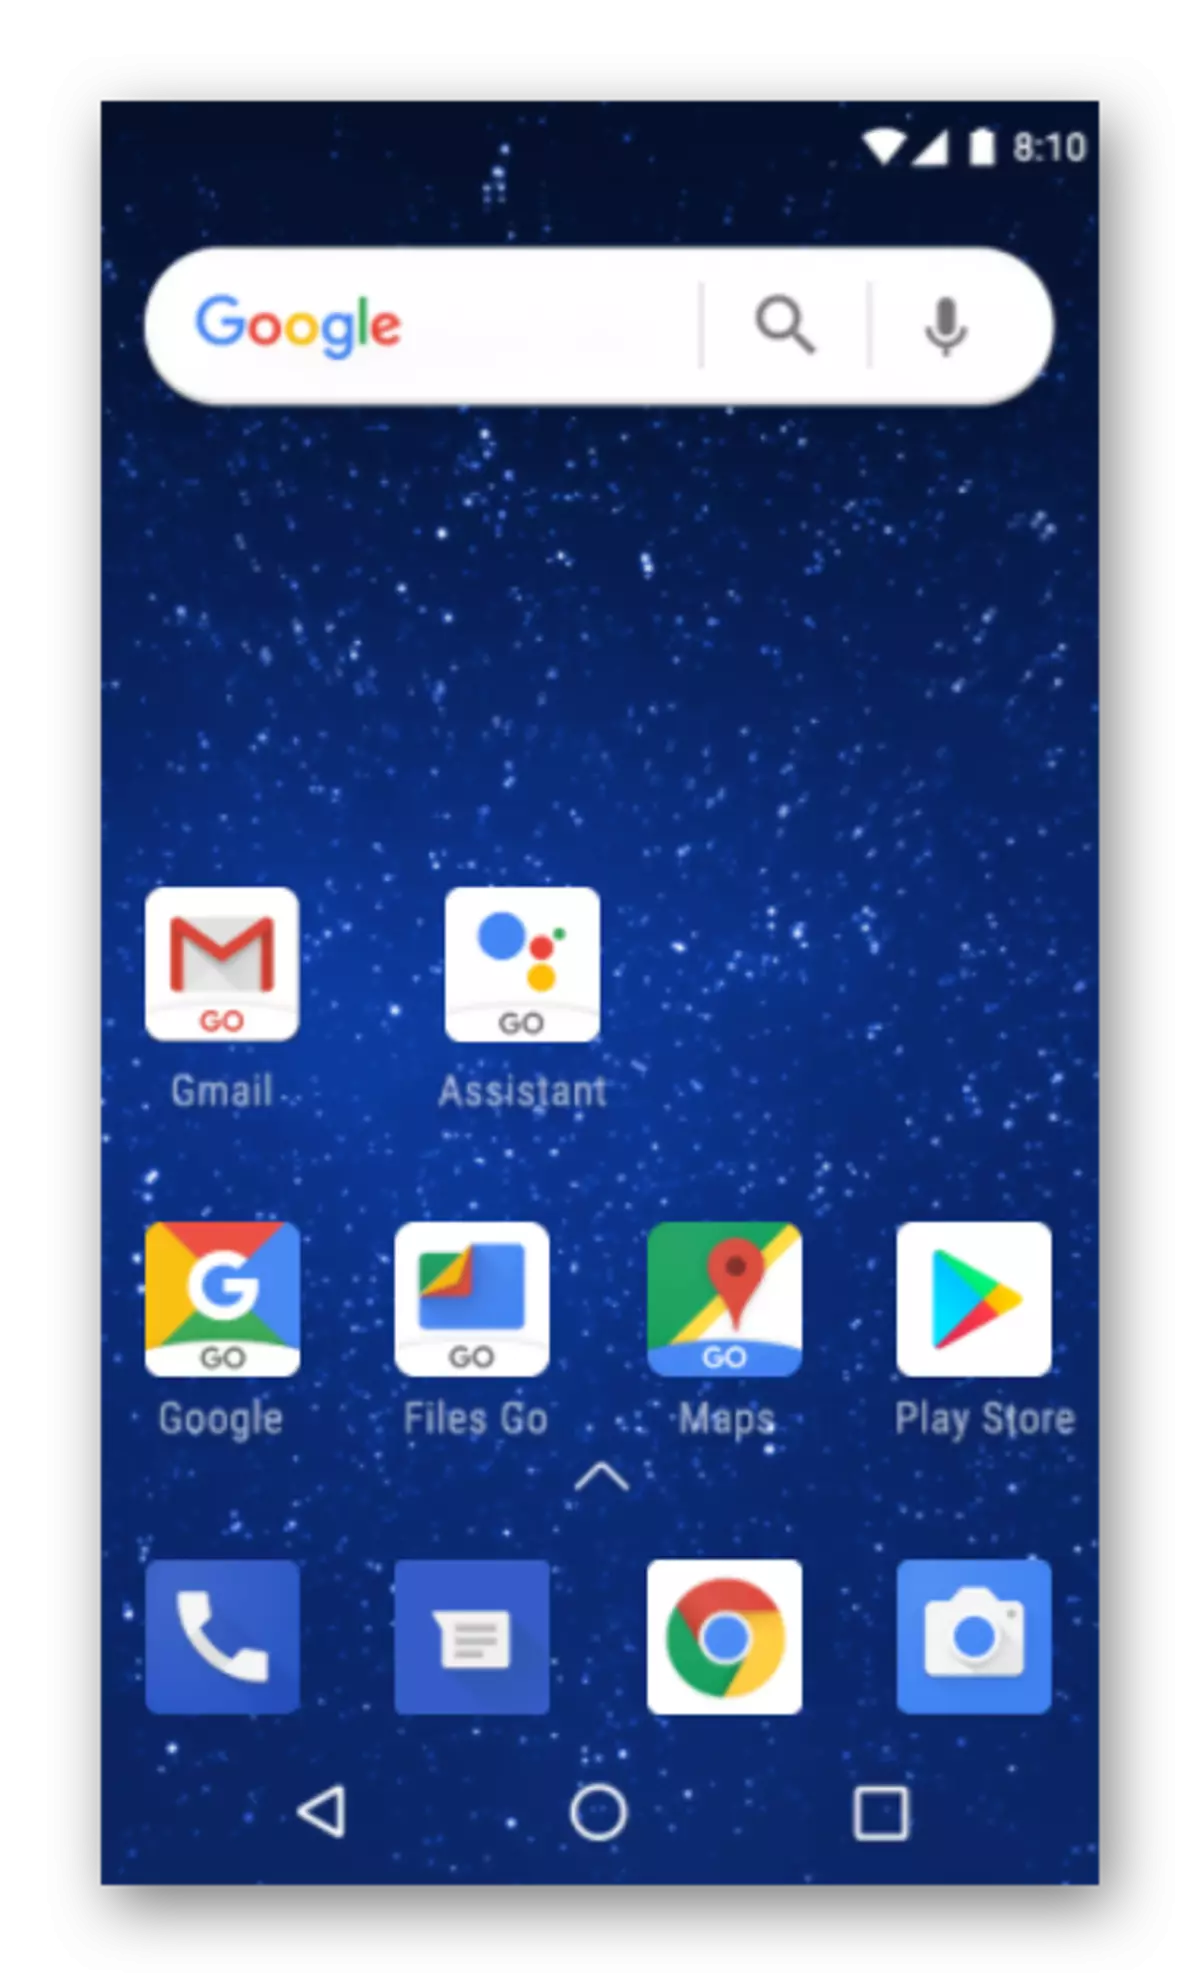 Desktop OS baru dari Google - Android Go